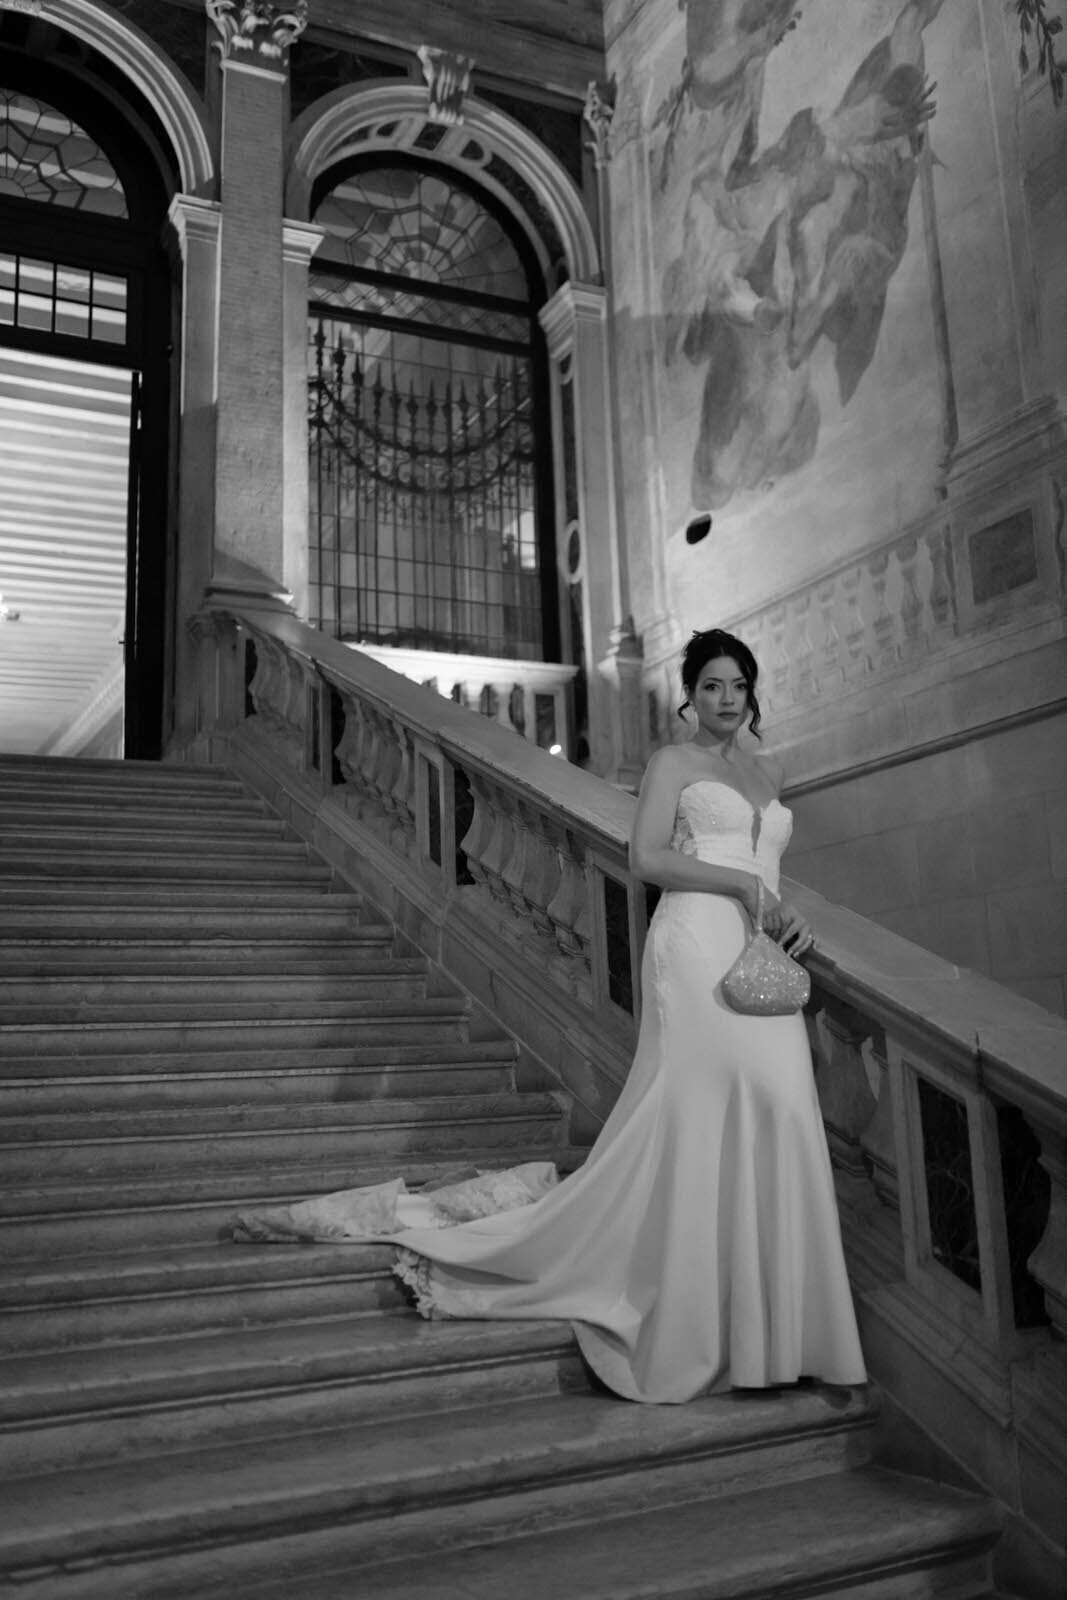 Flora_And_Grace_Venice_Editorial_Wedding_Photographer (119 von 198)